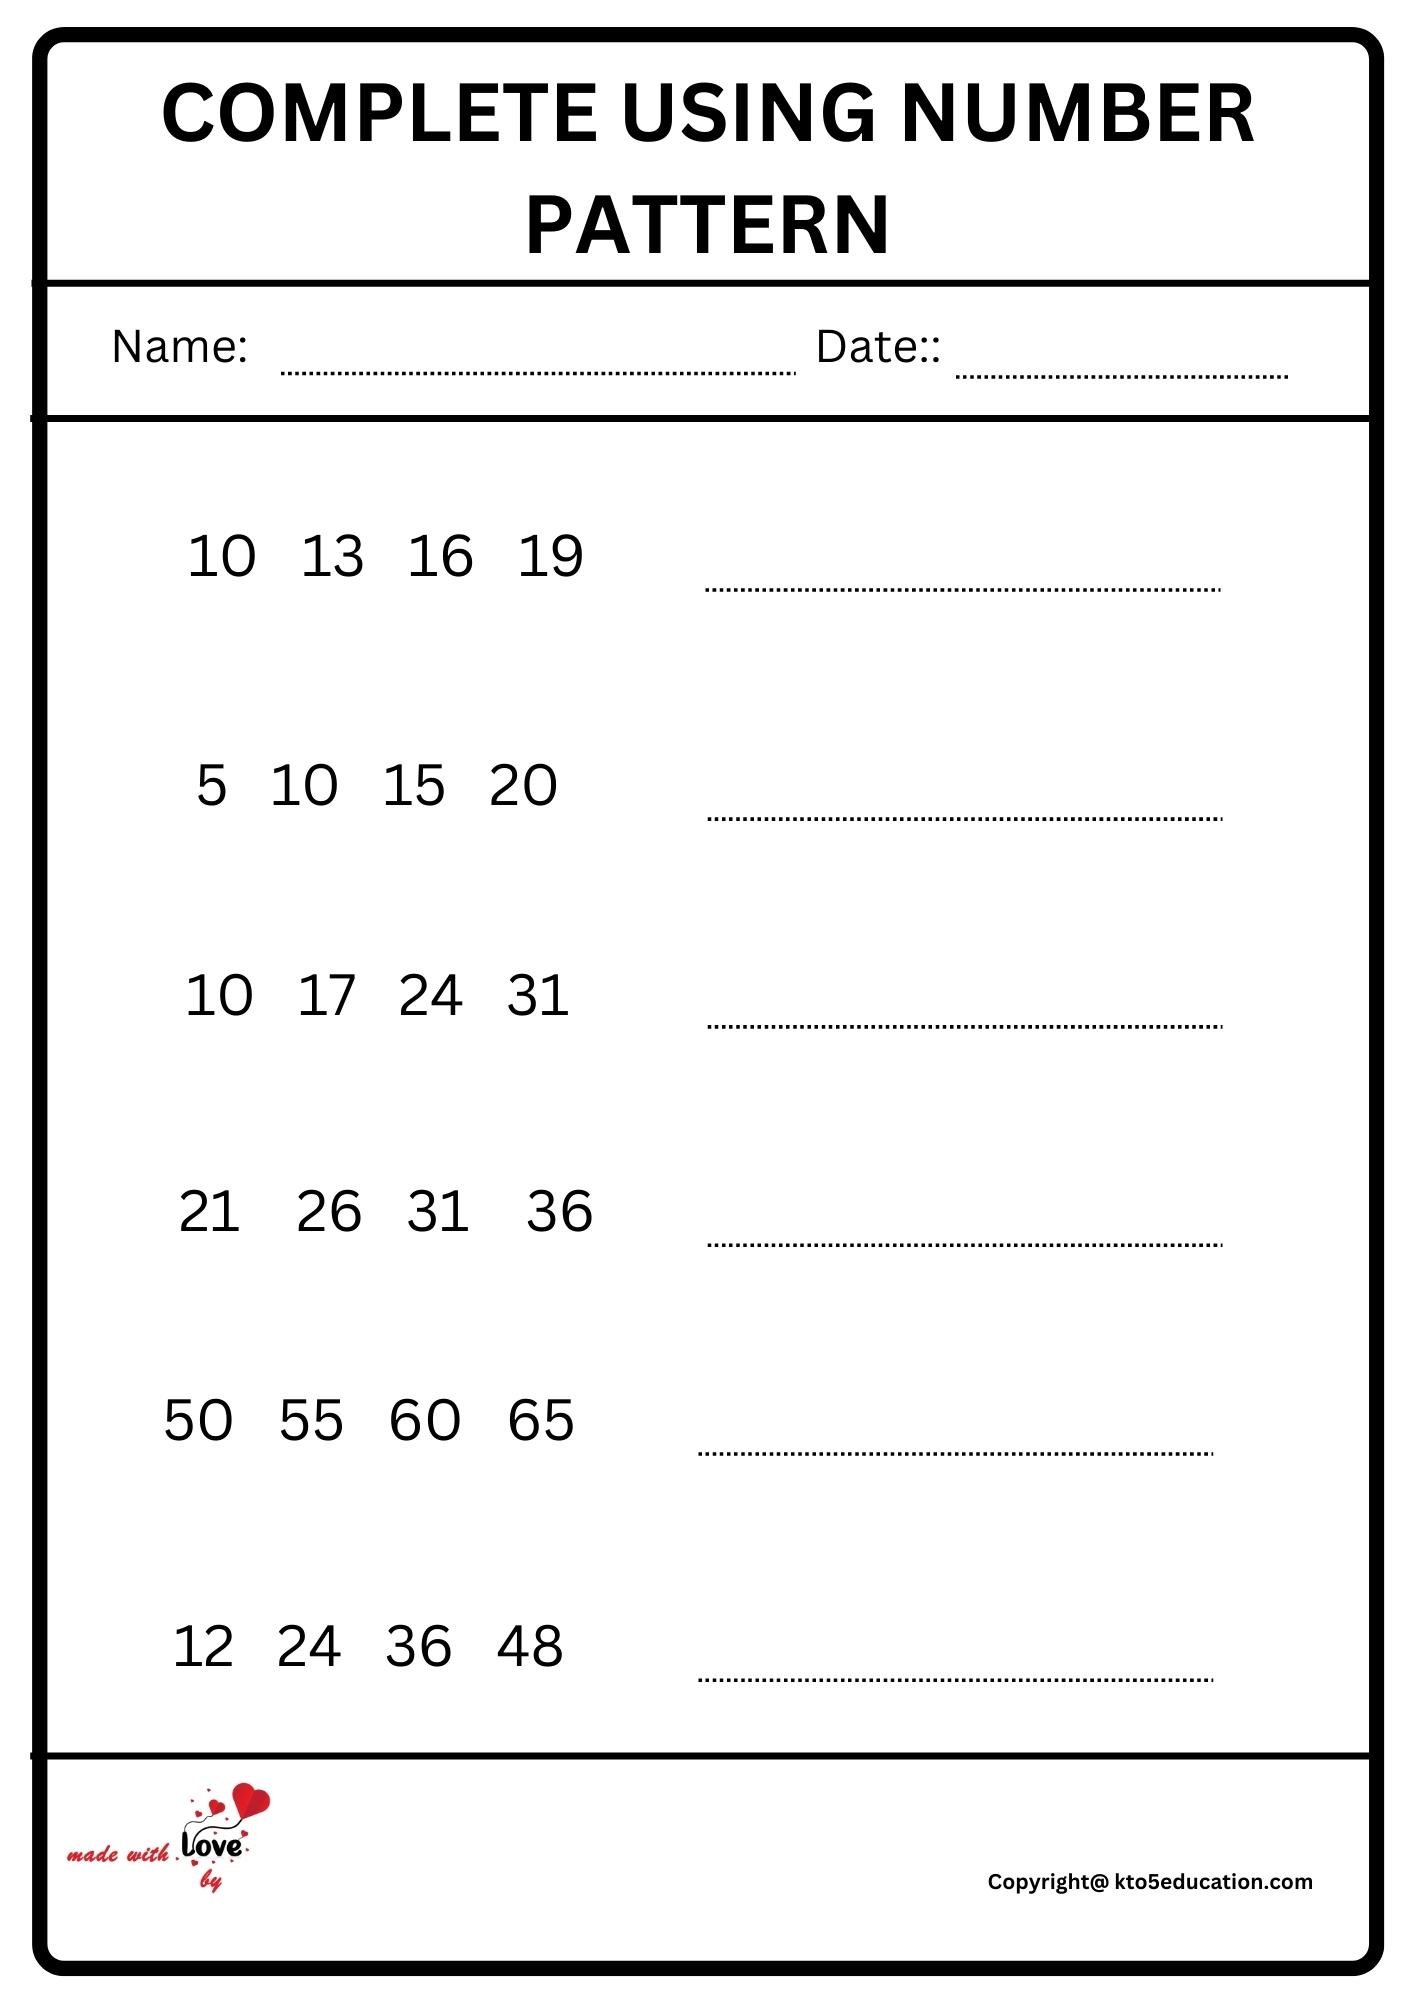 Complete Using Number pattern Worksheet